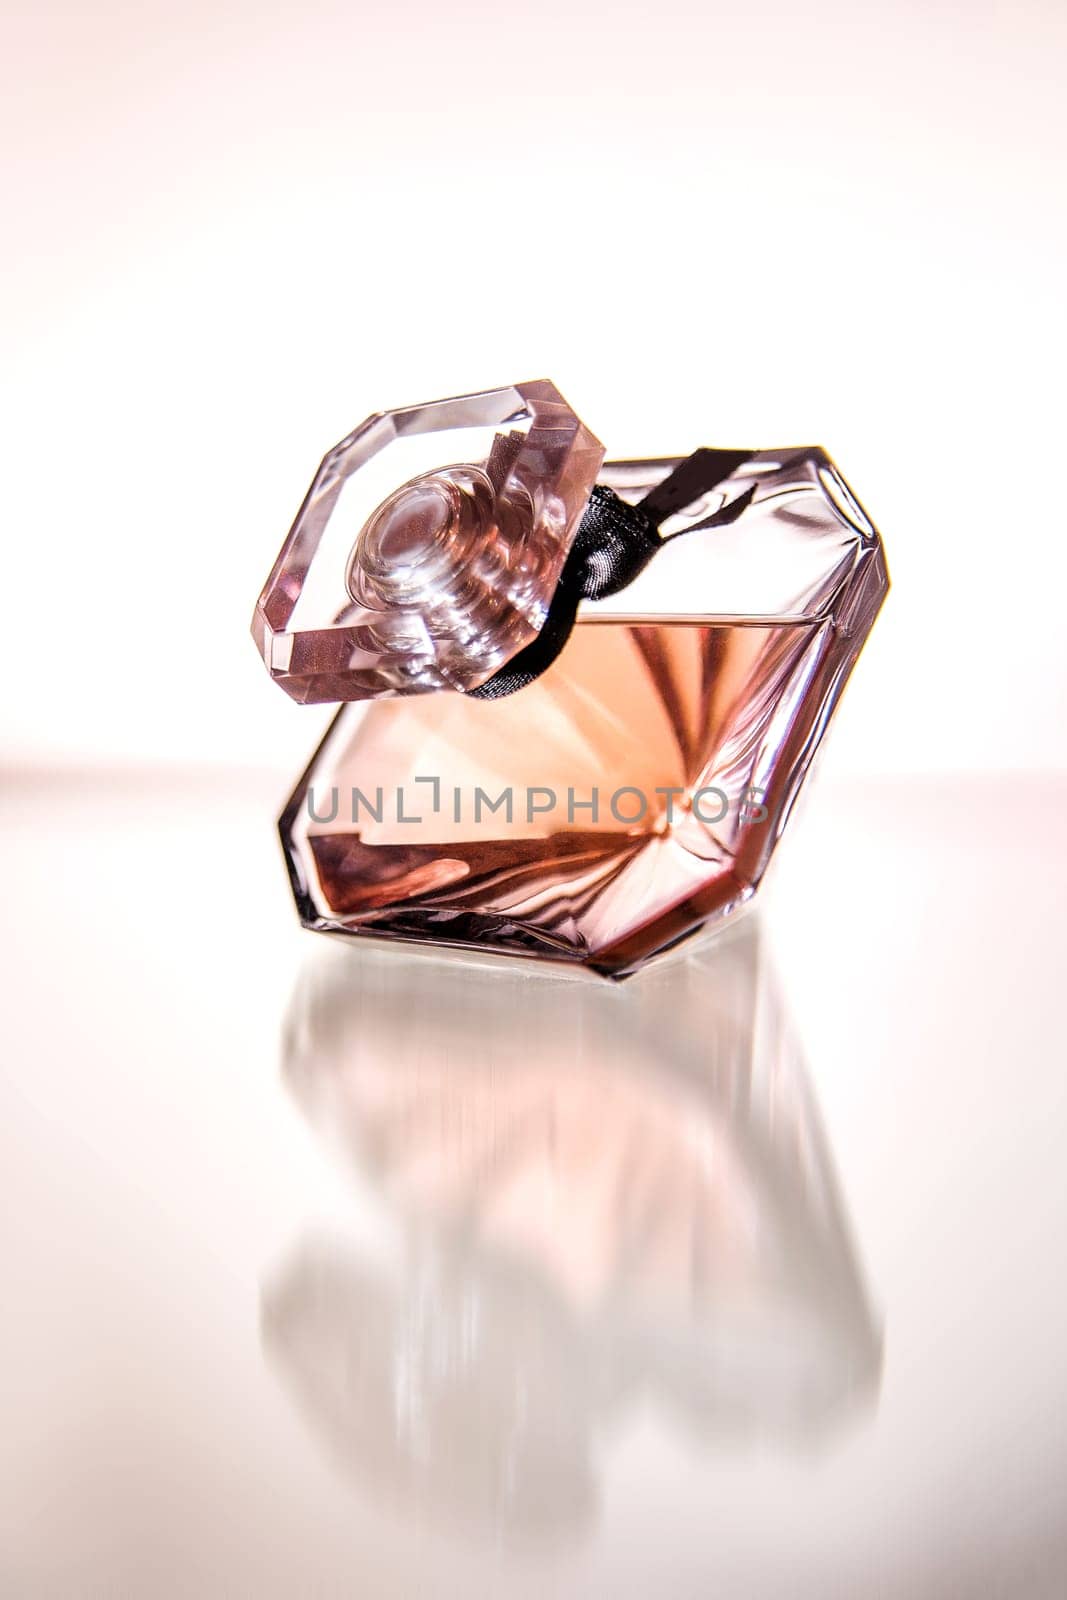 beautiful glass perfume bottle close-up. subject photo by Pukhovskiy